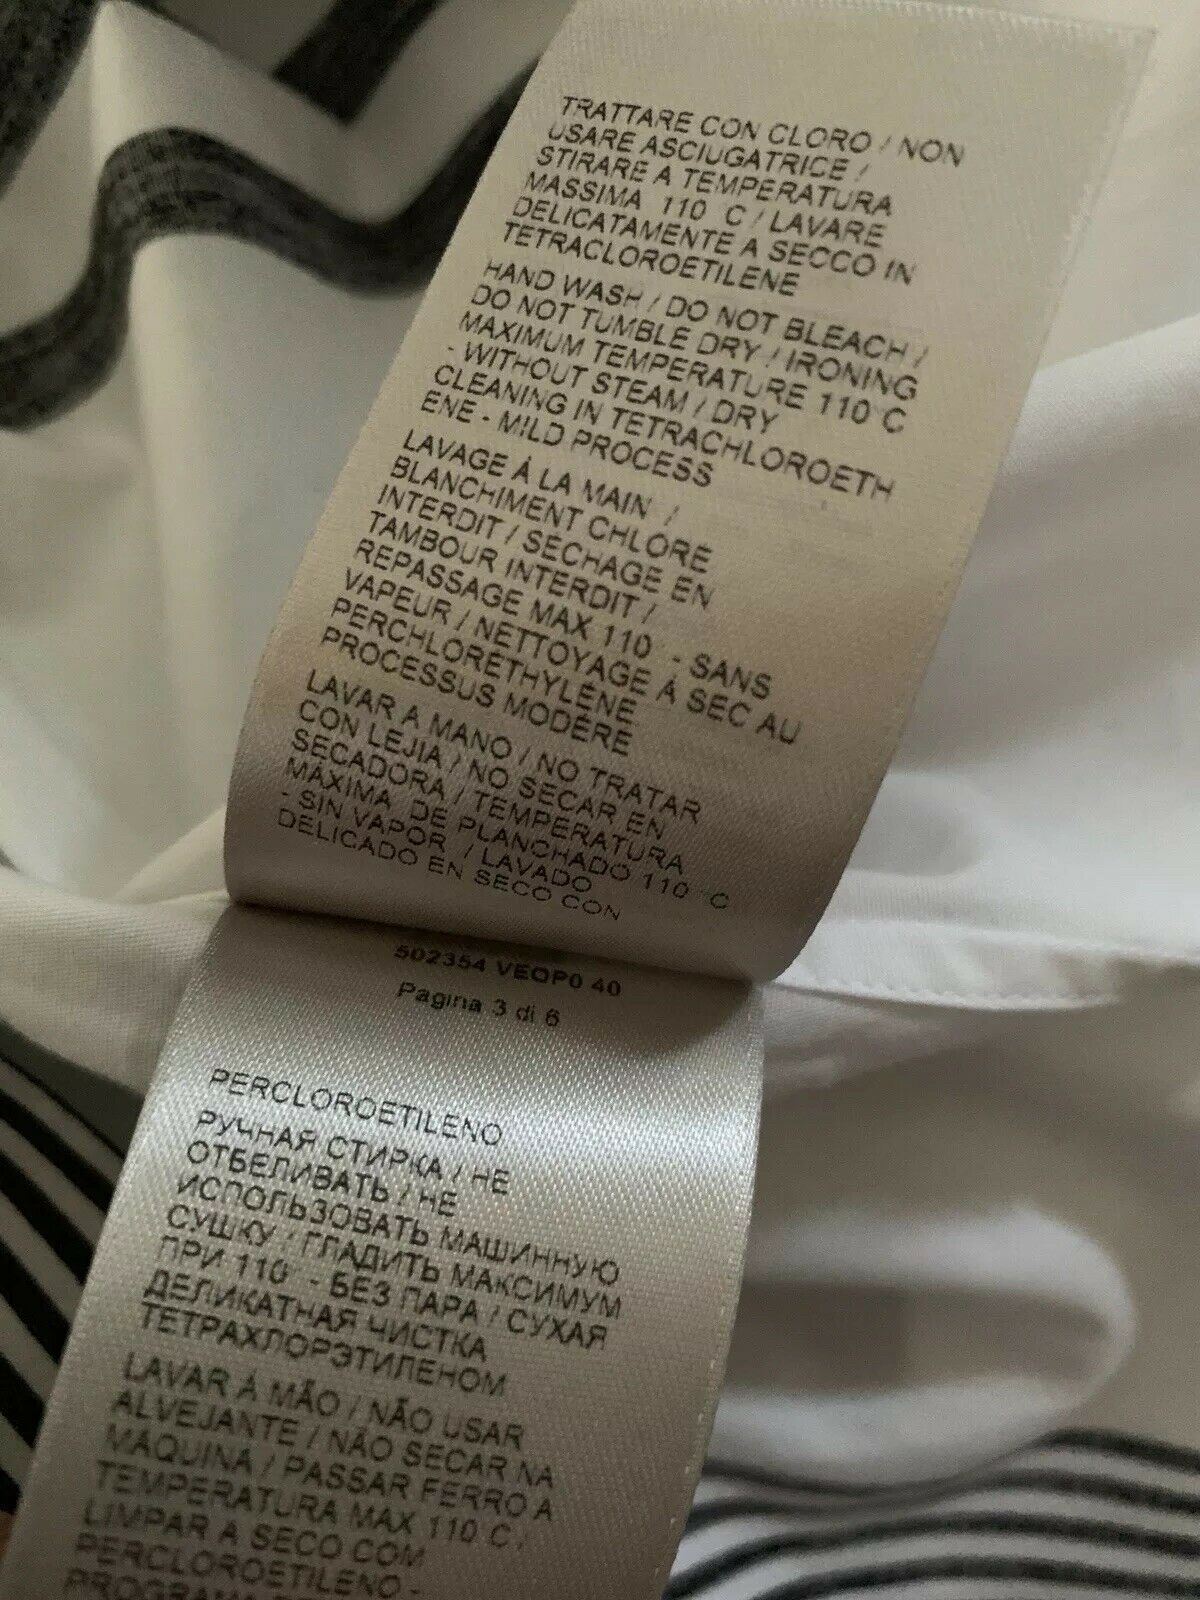 NWT 890 Bottega Veneta Mens Dress Shirt Black/White 40/15 3/4 Italy